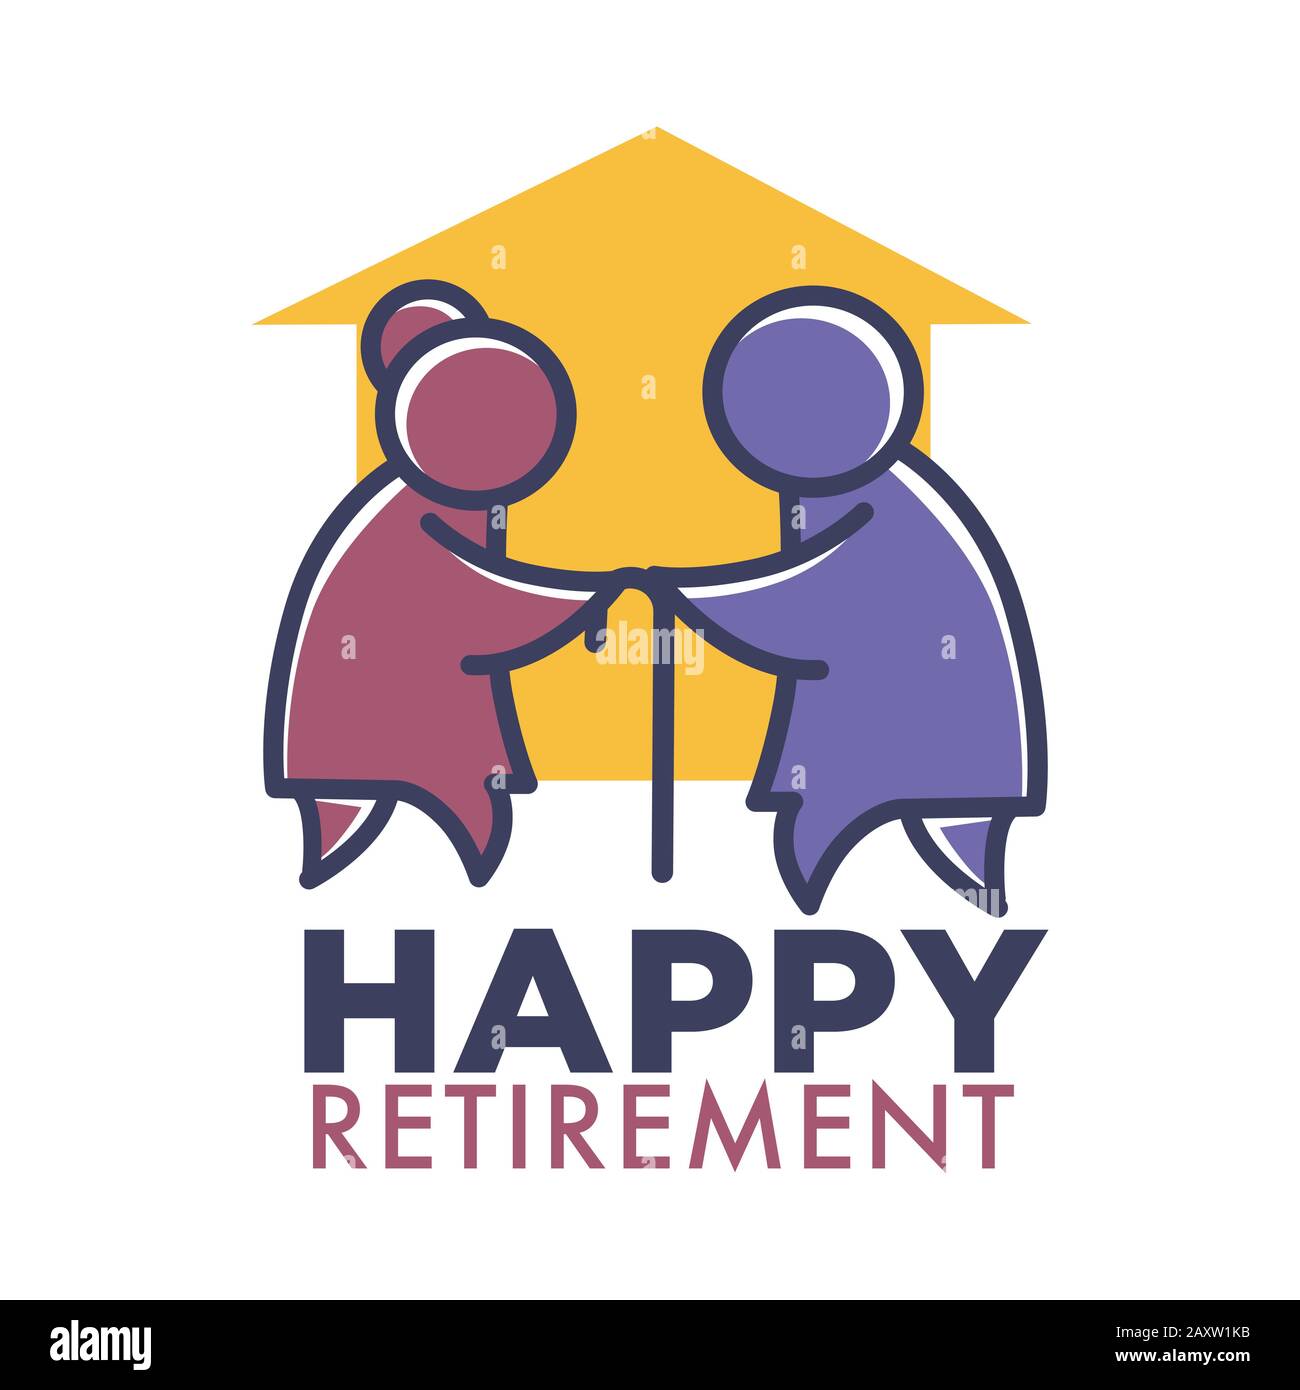 Happy retirement nursing home logo with elderly couple holding cane Stock Vector